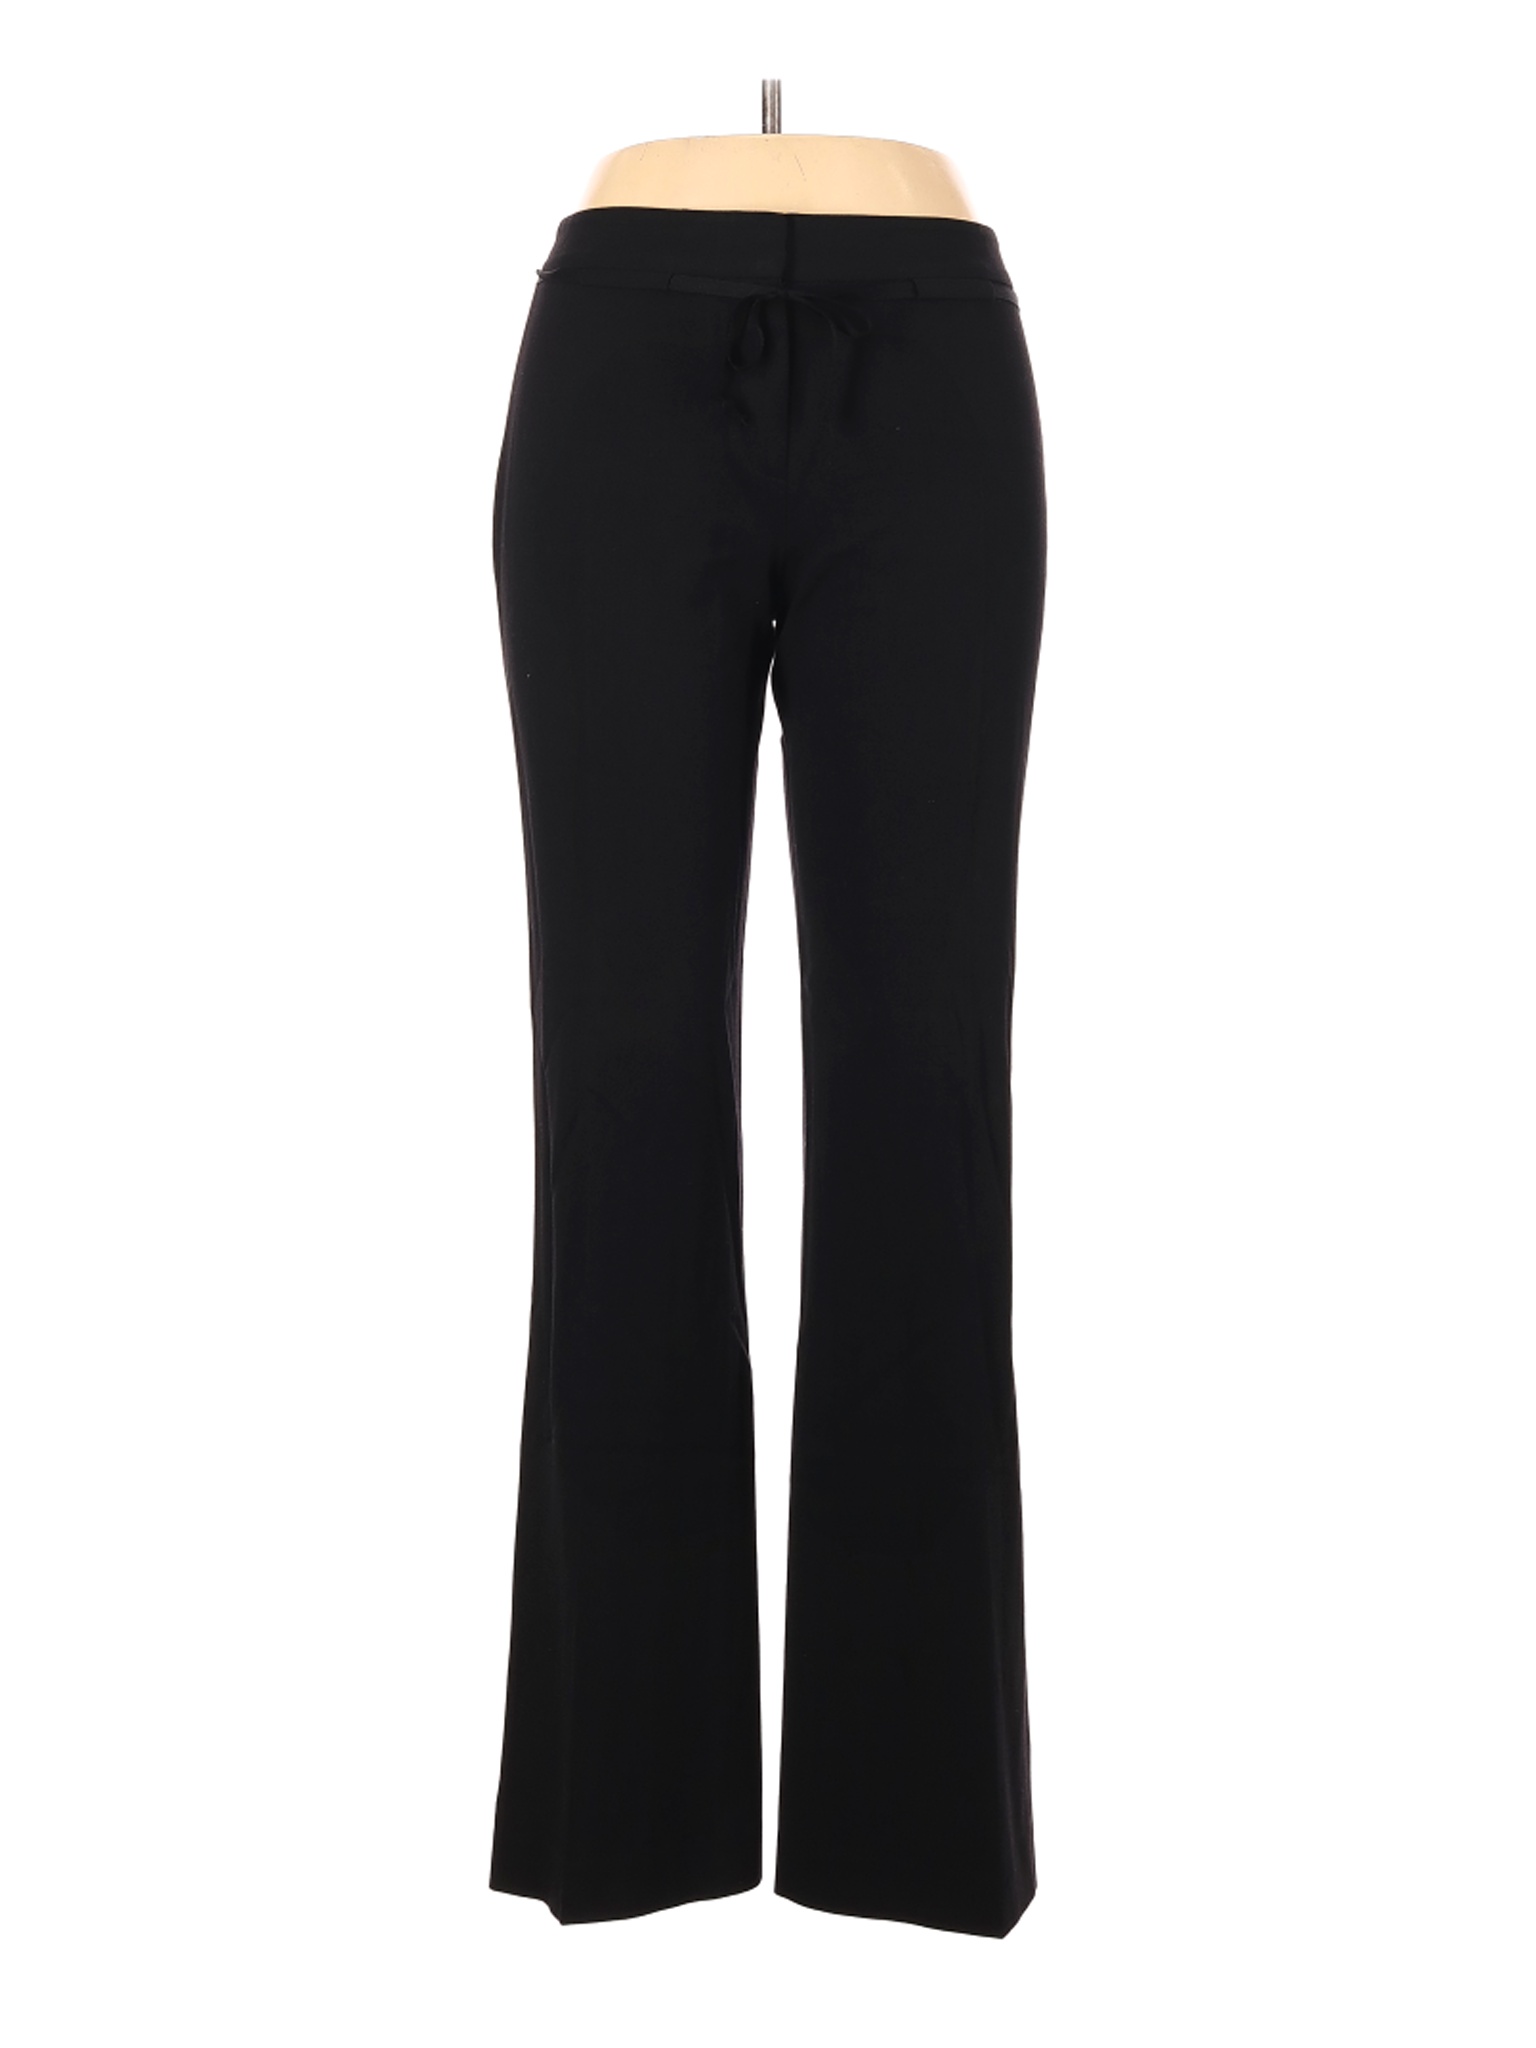 Tahari Women Black Dress Pants 8 | eBay